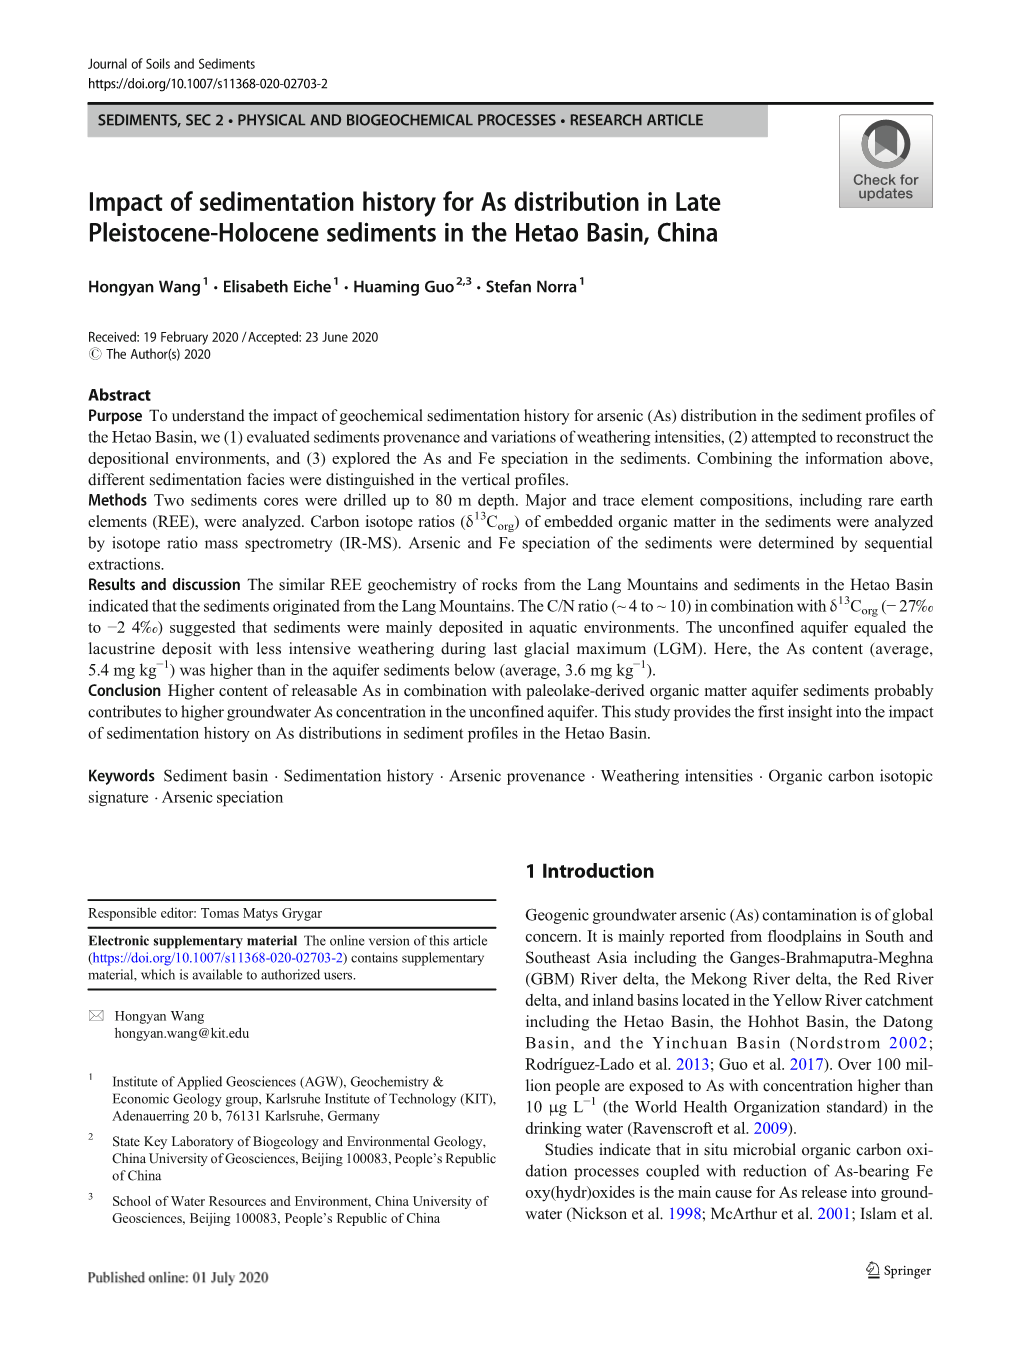 Impact of Sedimentation History for As Distribution in Late Pleistocene-Holocene Sediments in the Hetao Basin, China